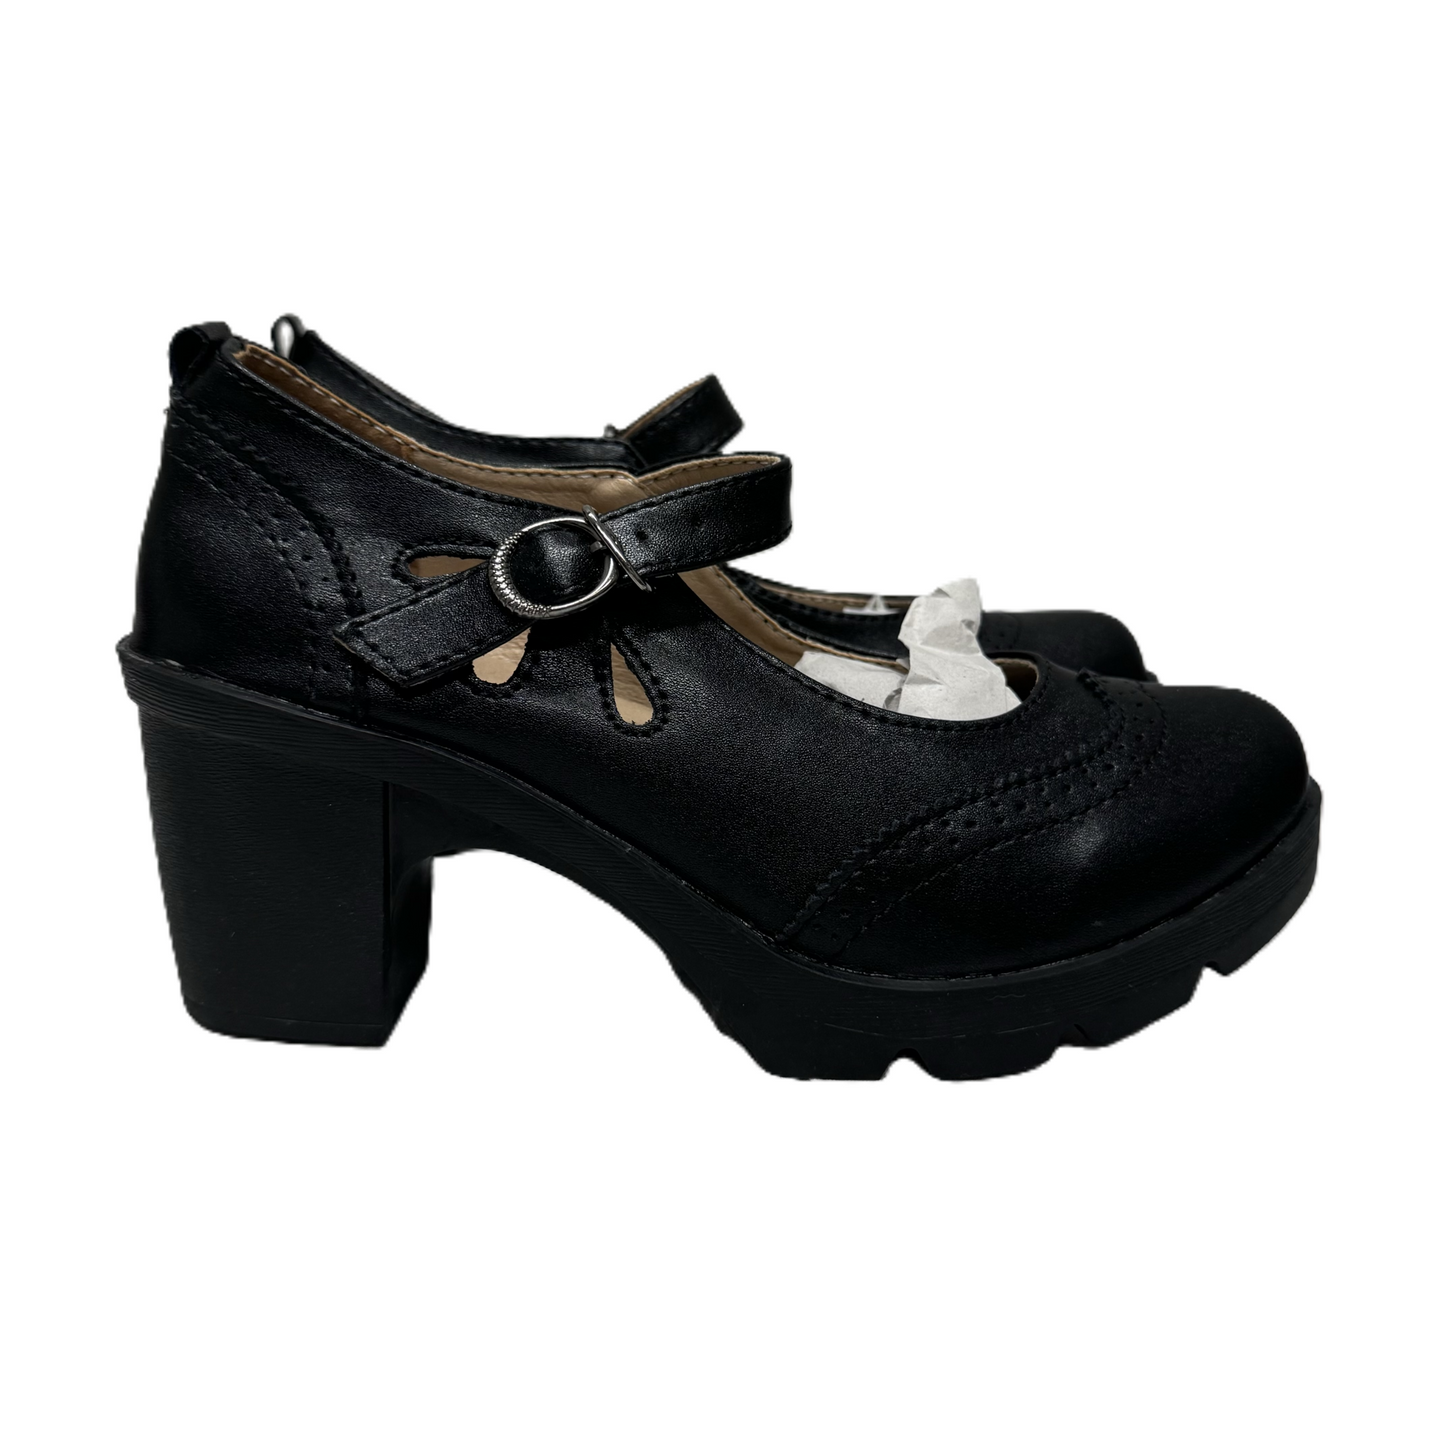 Shoes Heels Block By Dadawen, Size: 8.5